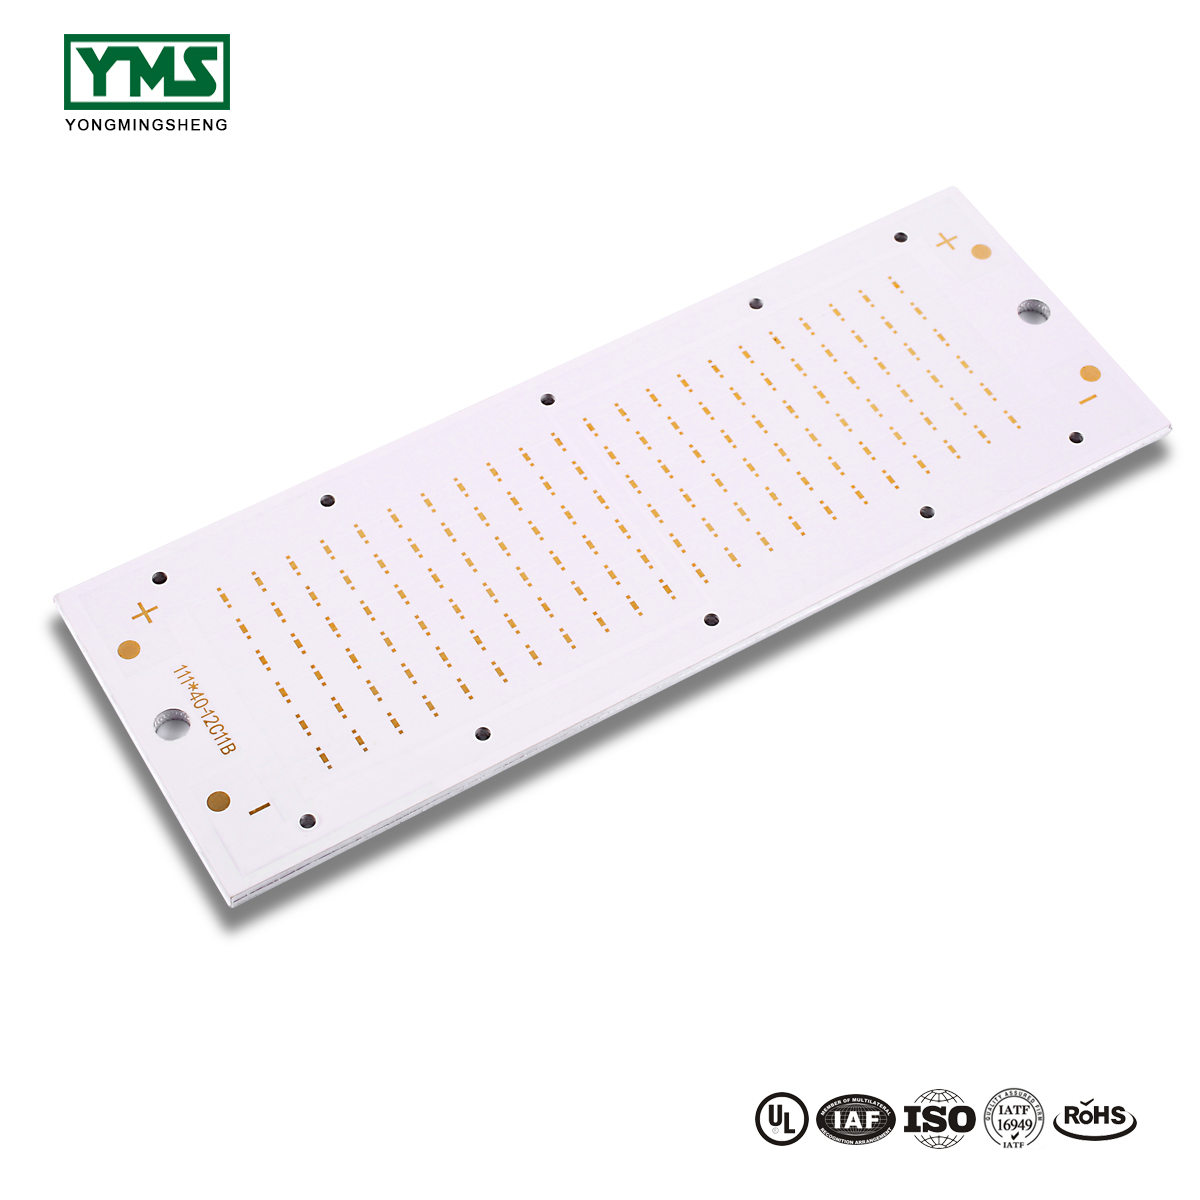 Big Discount Bare Pcb Board Ceramic - 1Layer Aluminum base Board | YMSPCB – Yongmingsheng